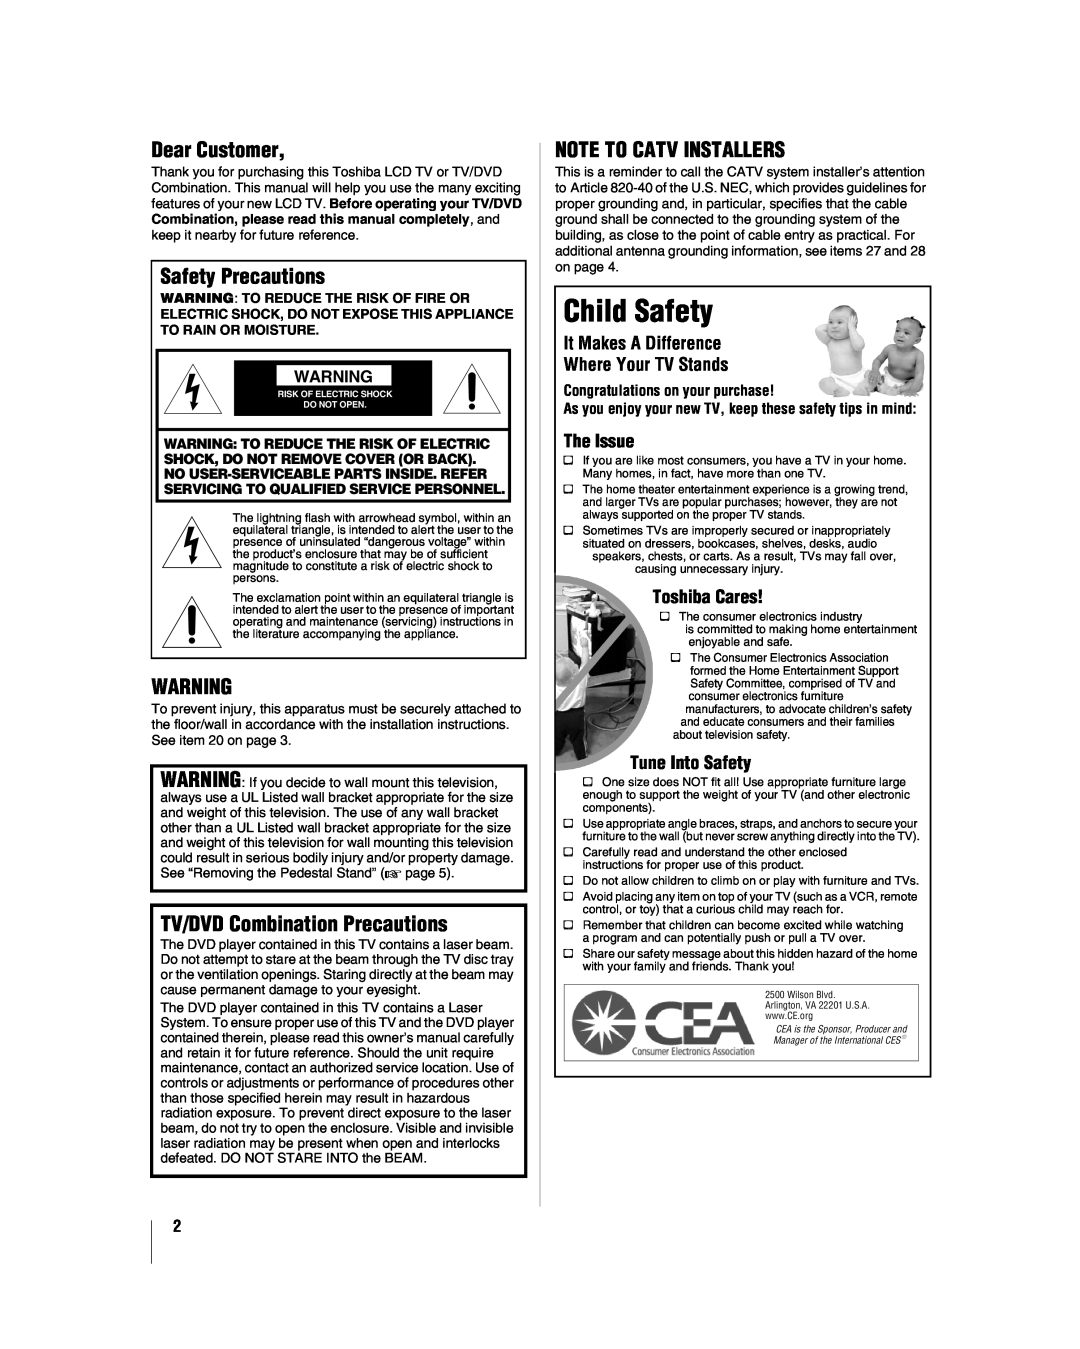 Toshiba 26LV67 manual Dear Customer, Safety Precautions, TV/DVD Combination Precautions, Note To Catv Installers, The Issue 